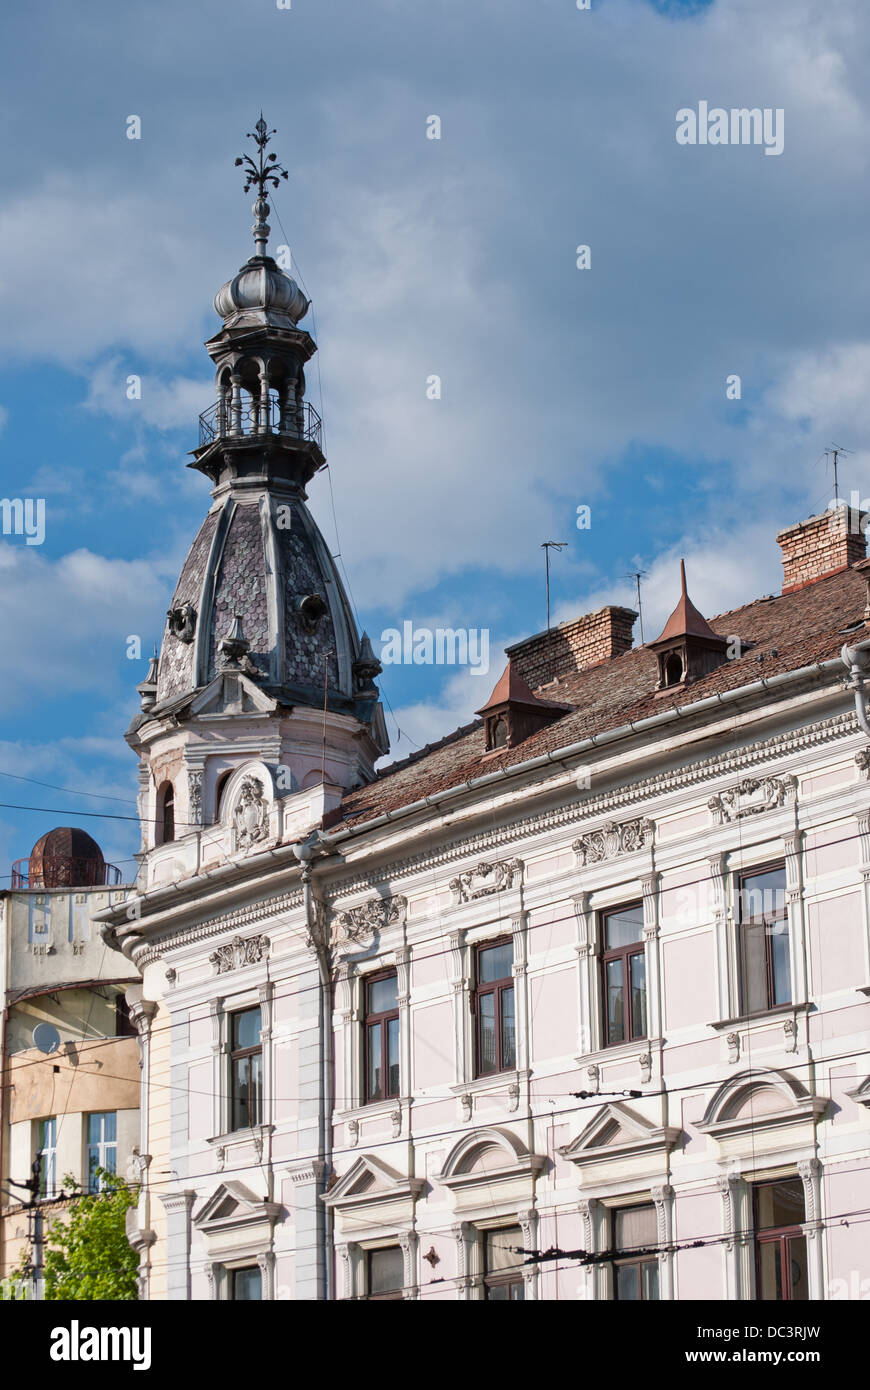 Street landmark in Cluj-Napoca, Romania, Dettagli architettonici Foto Stock